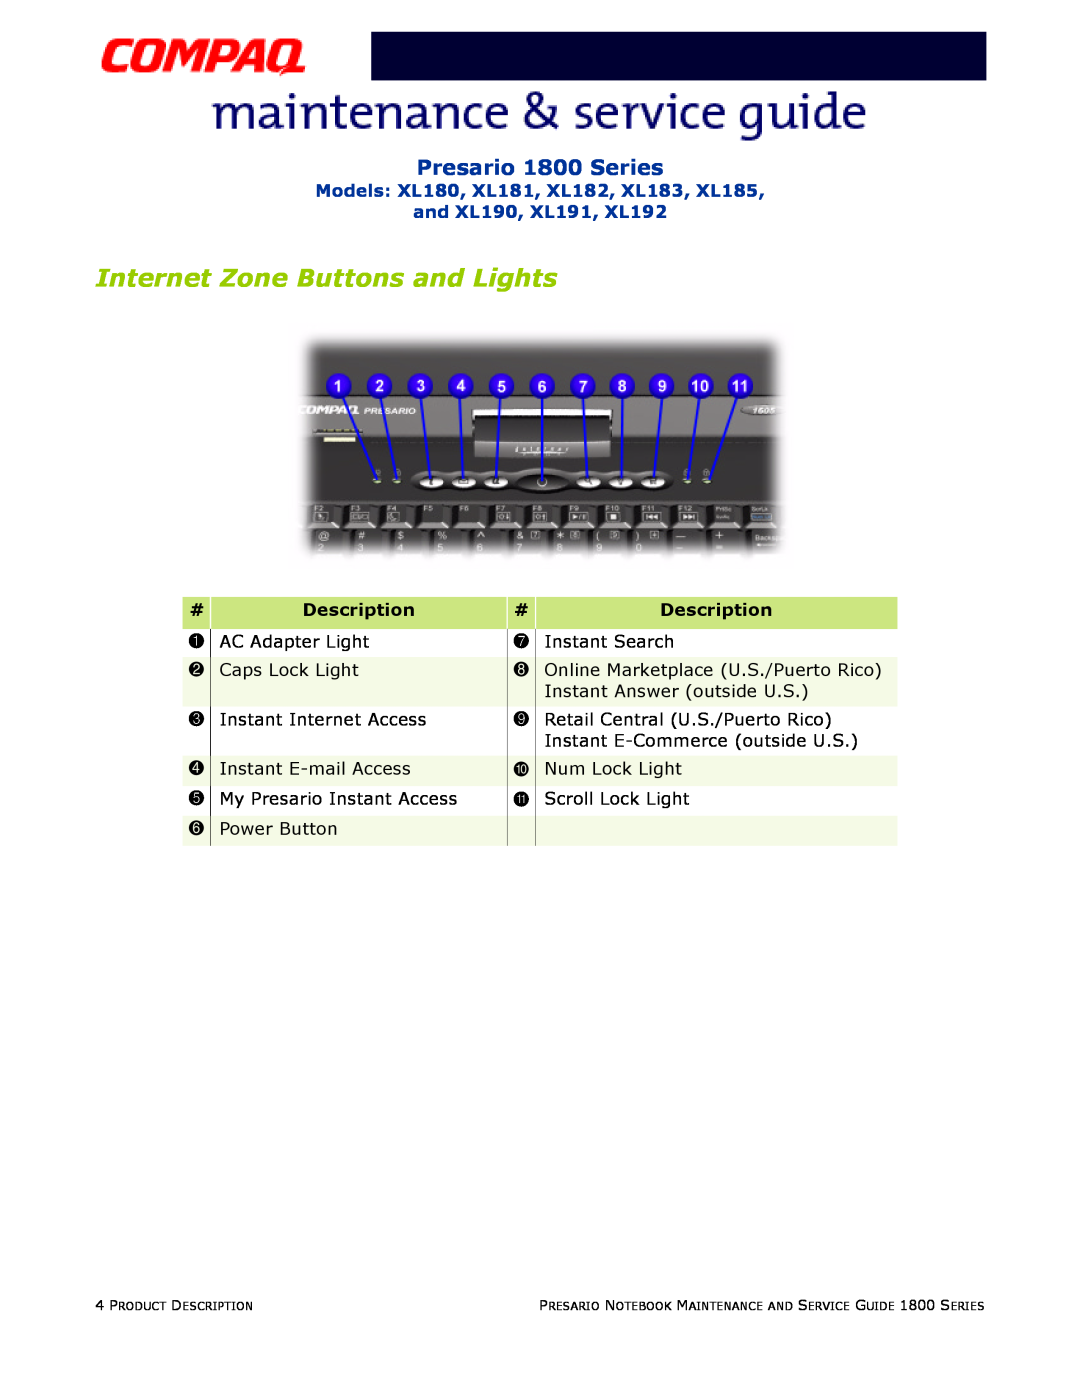 Compaq XL180, XL190, XL191, XL192, XL183, XL181, XL185 Internet Zone Buttons and Lights, Presario 1800 Series, # Description 